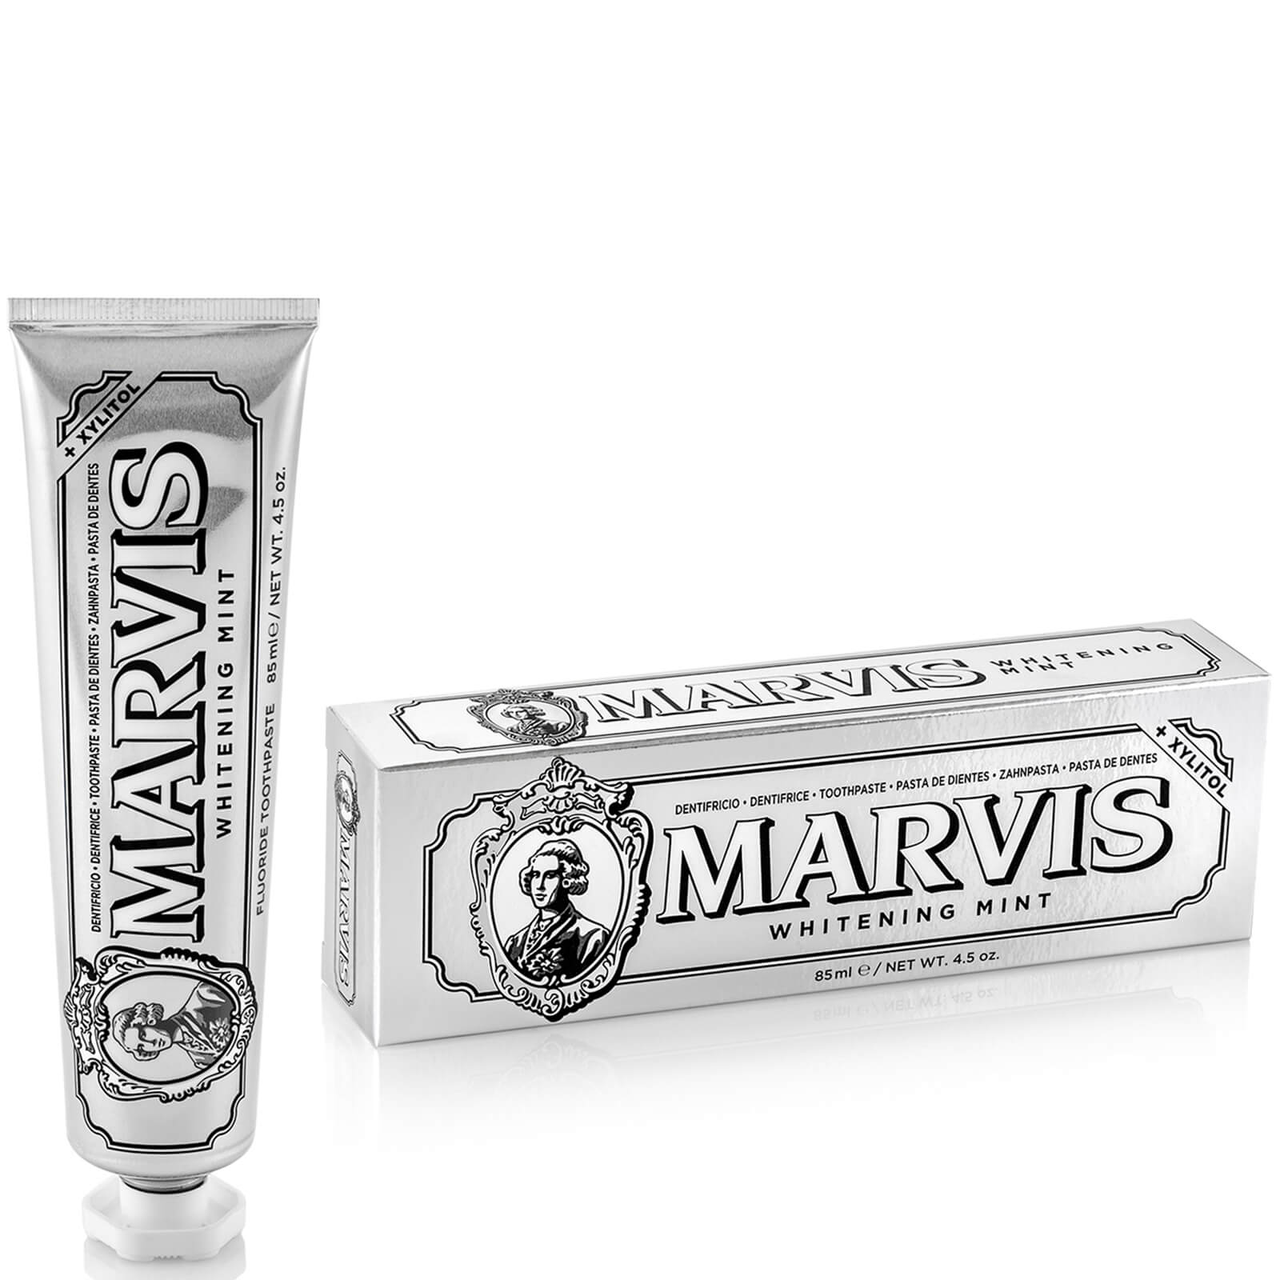 Marvis *薄荷牙膏 85ml